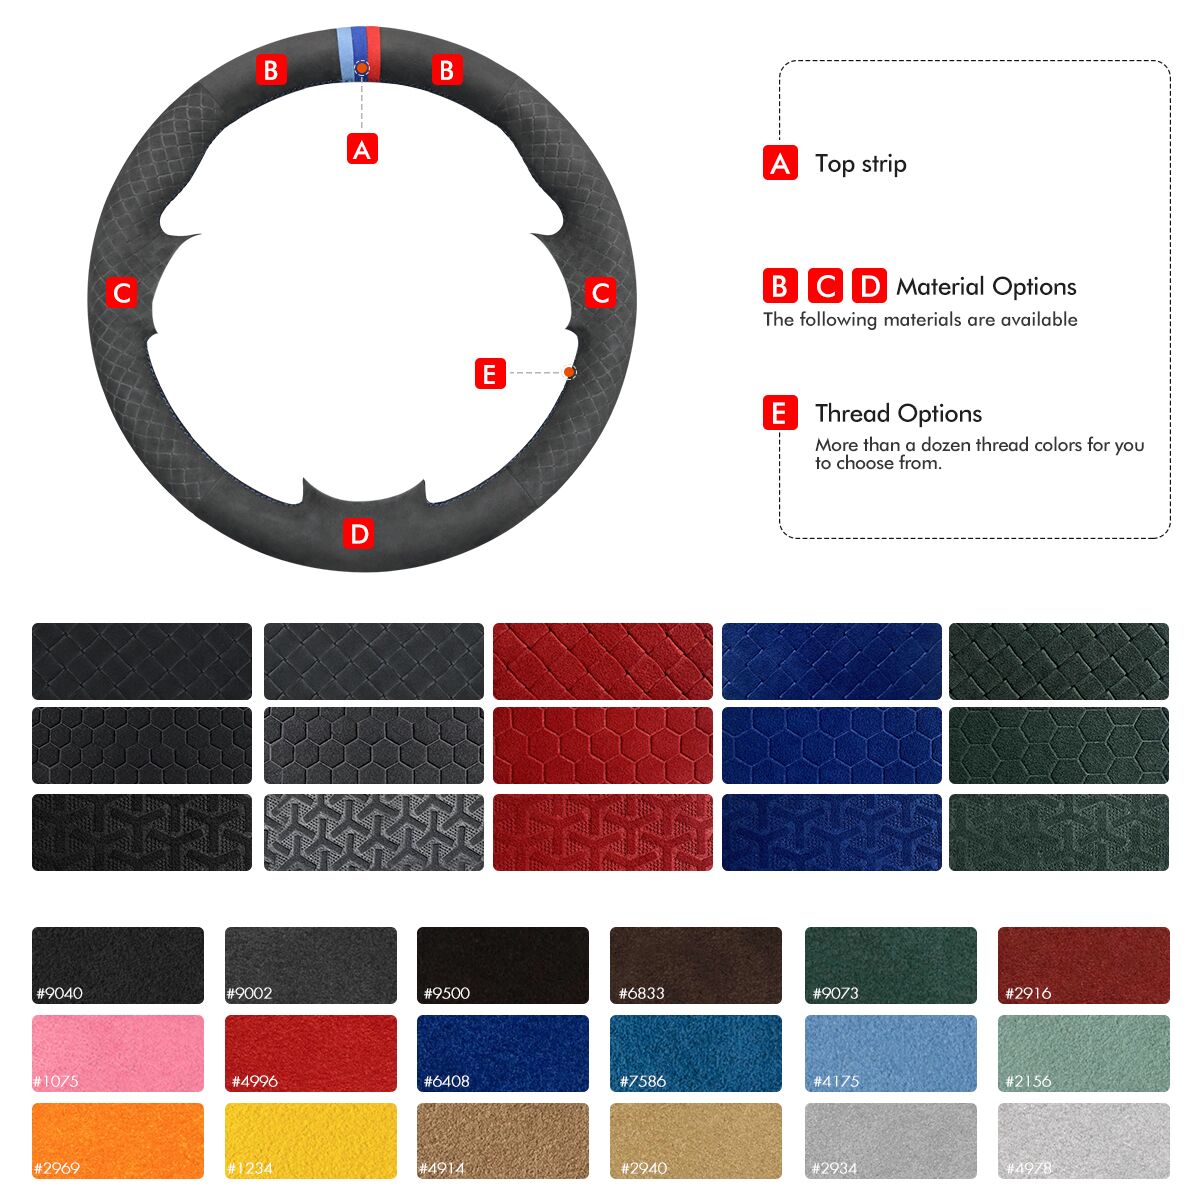 MEWANT DIY Carbon Fiber Leather Car Steering Wheel Cover for BMW M Sport E46 330i 330Ci / E39 540i 525i 530i / M3 E46 / M5 E39